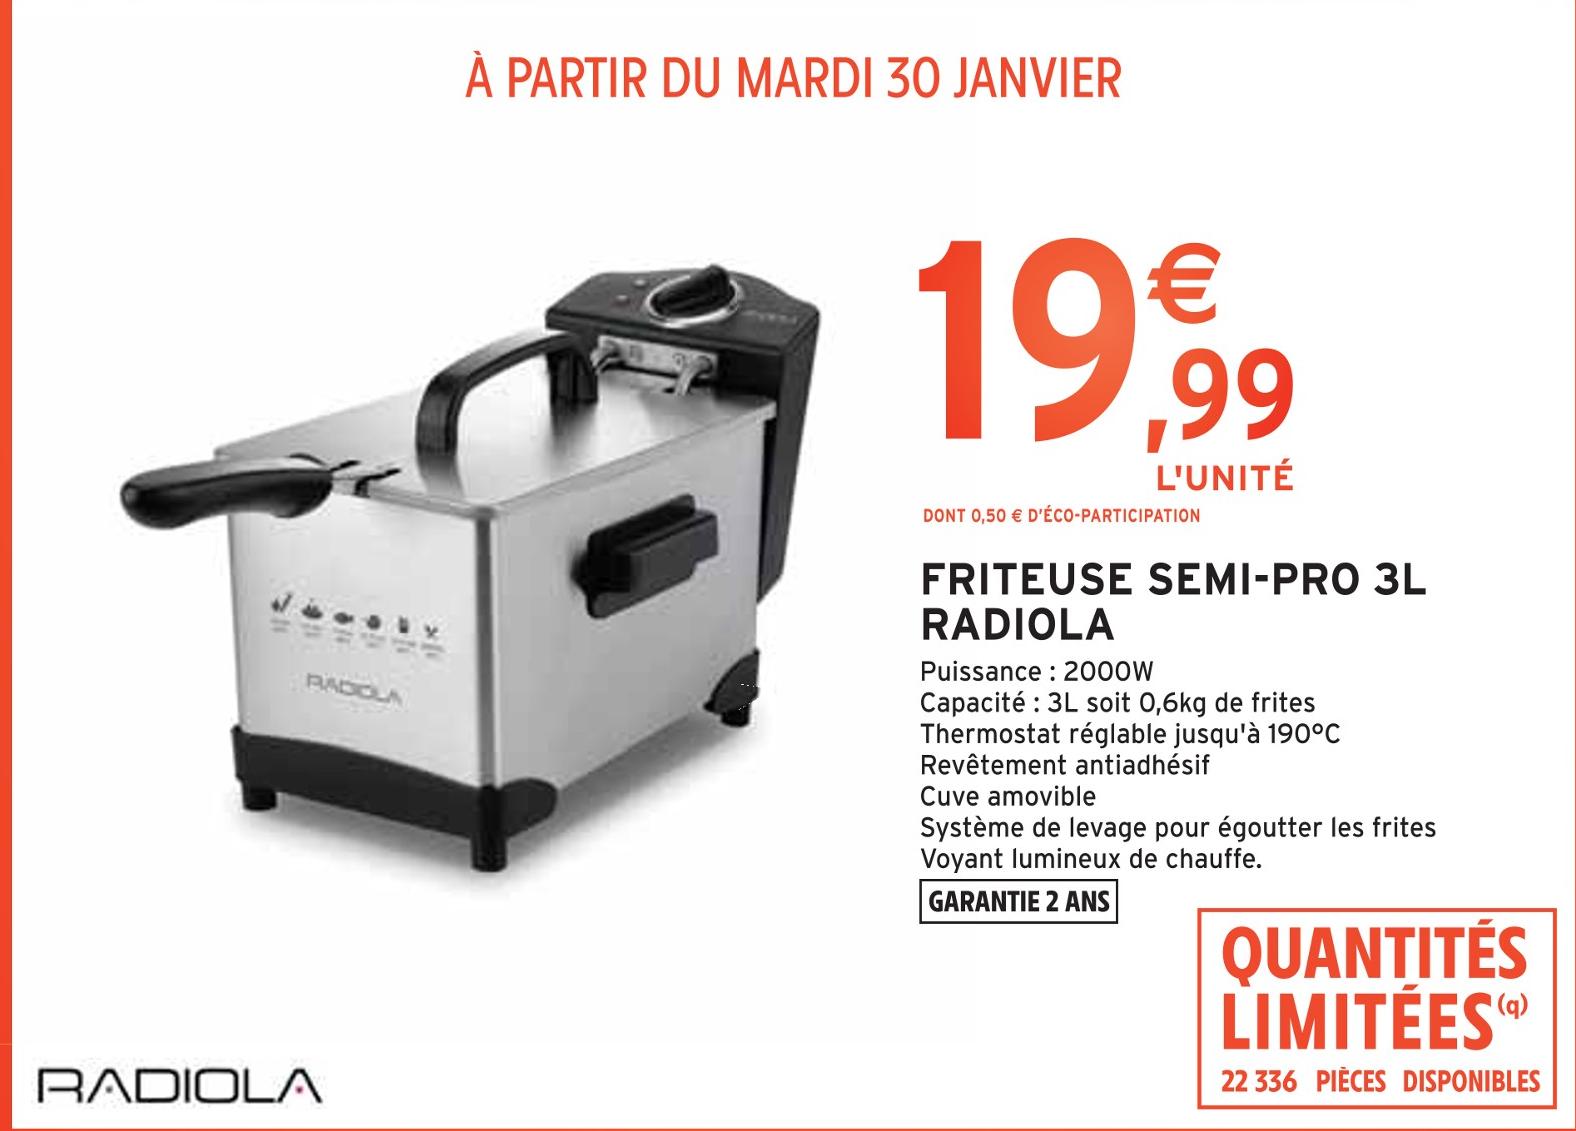 Promo Friteuse Super Uno Moulinex chez E.Leclerc